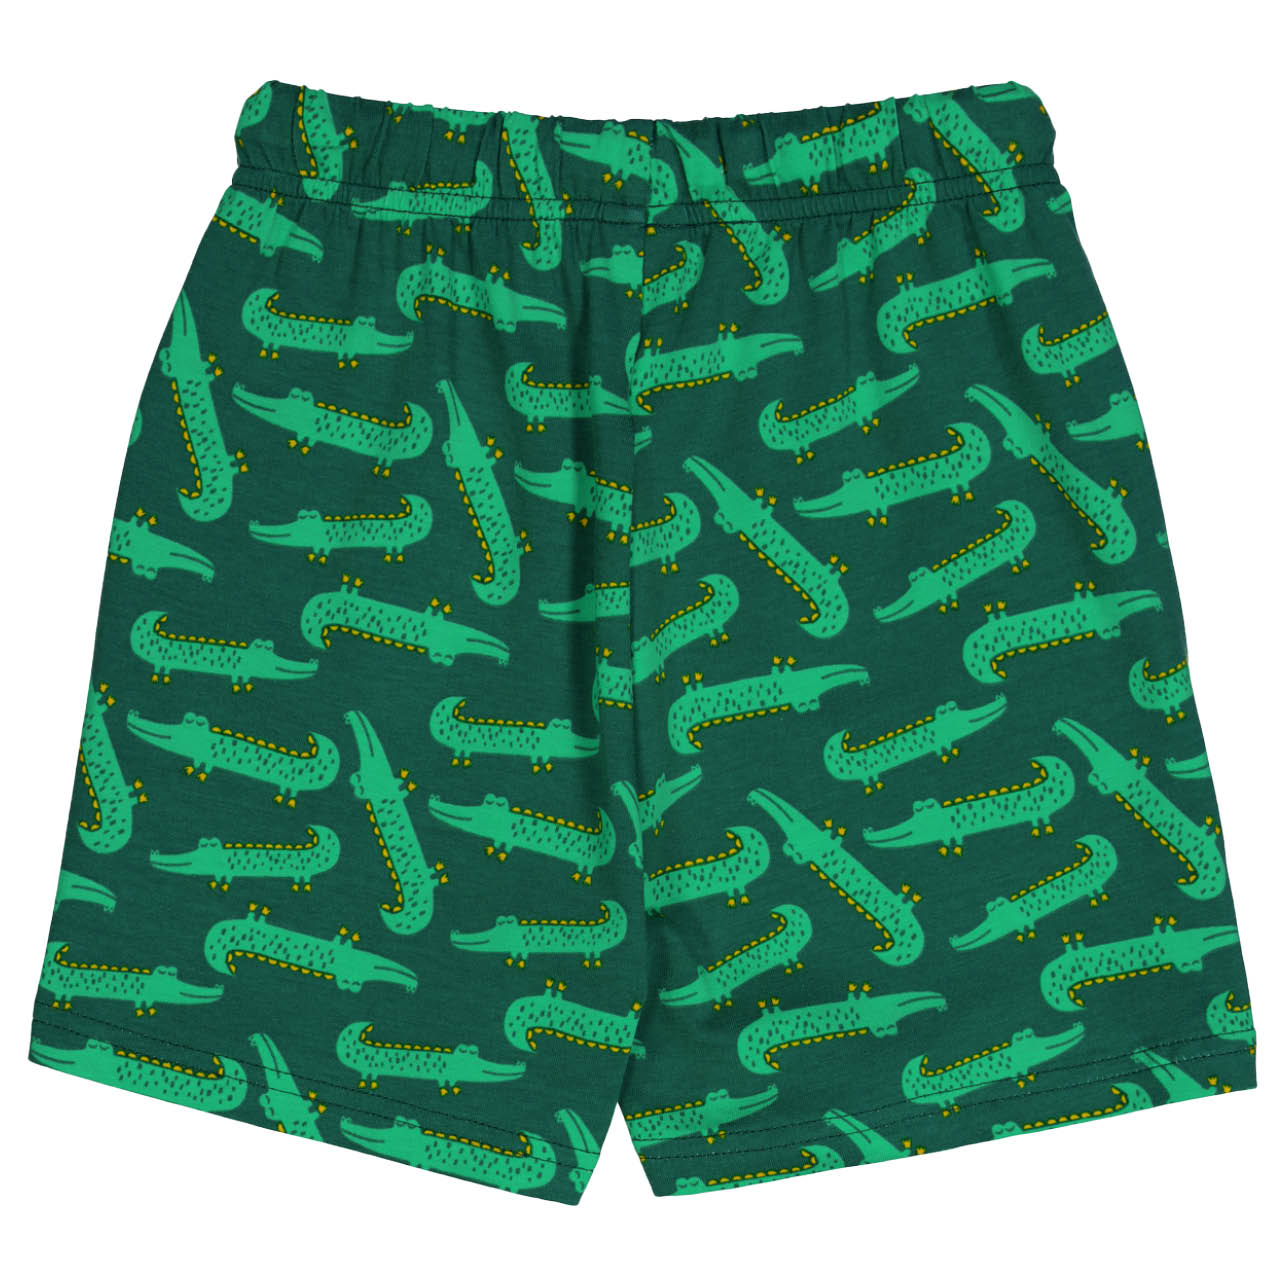 Weite Jersey Shorts Krokodile grün